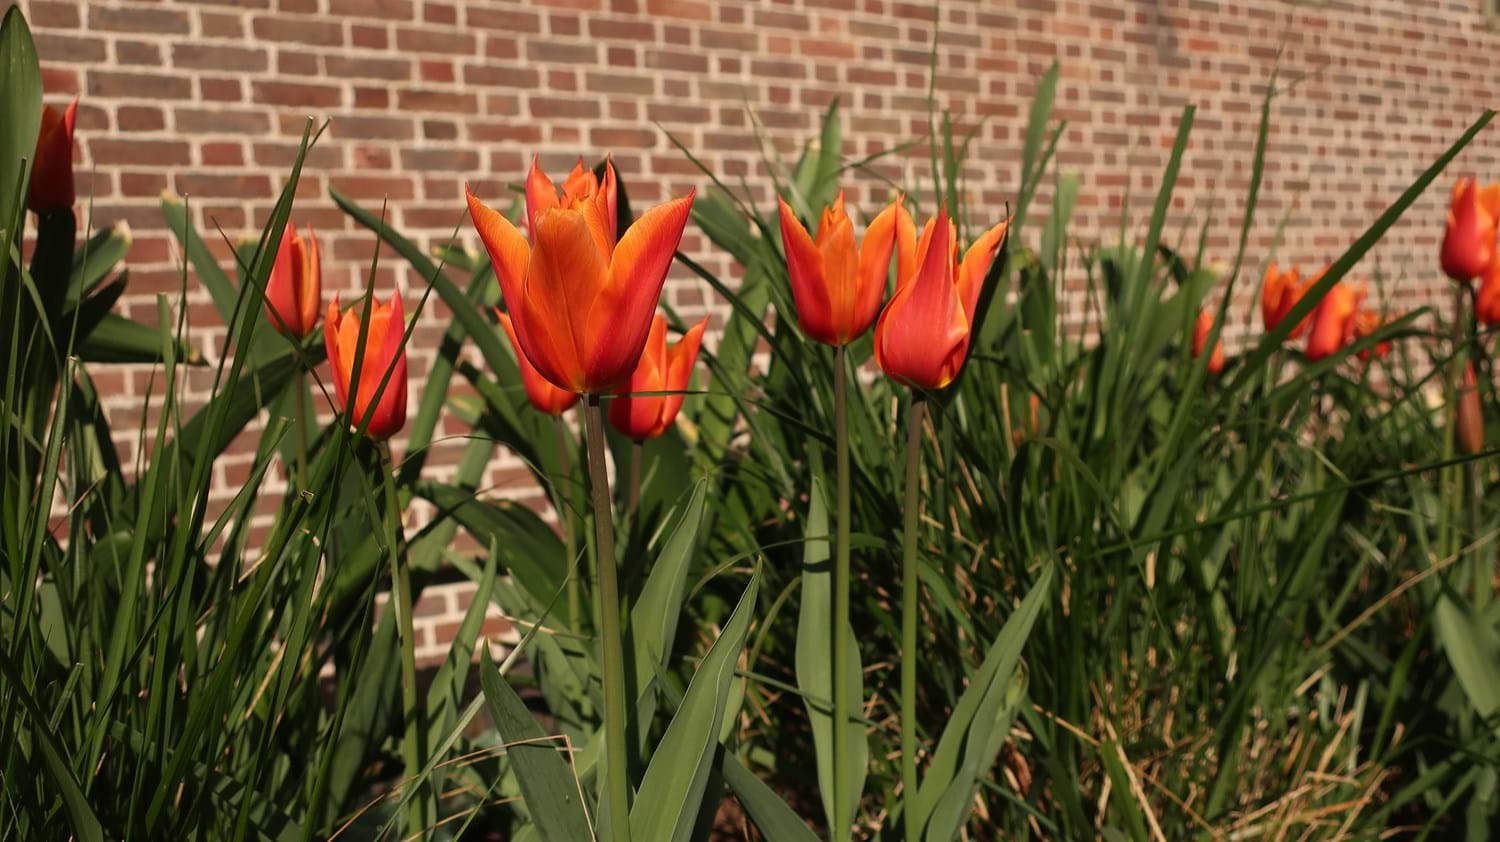 orange tulips against a brick wall